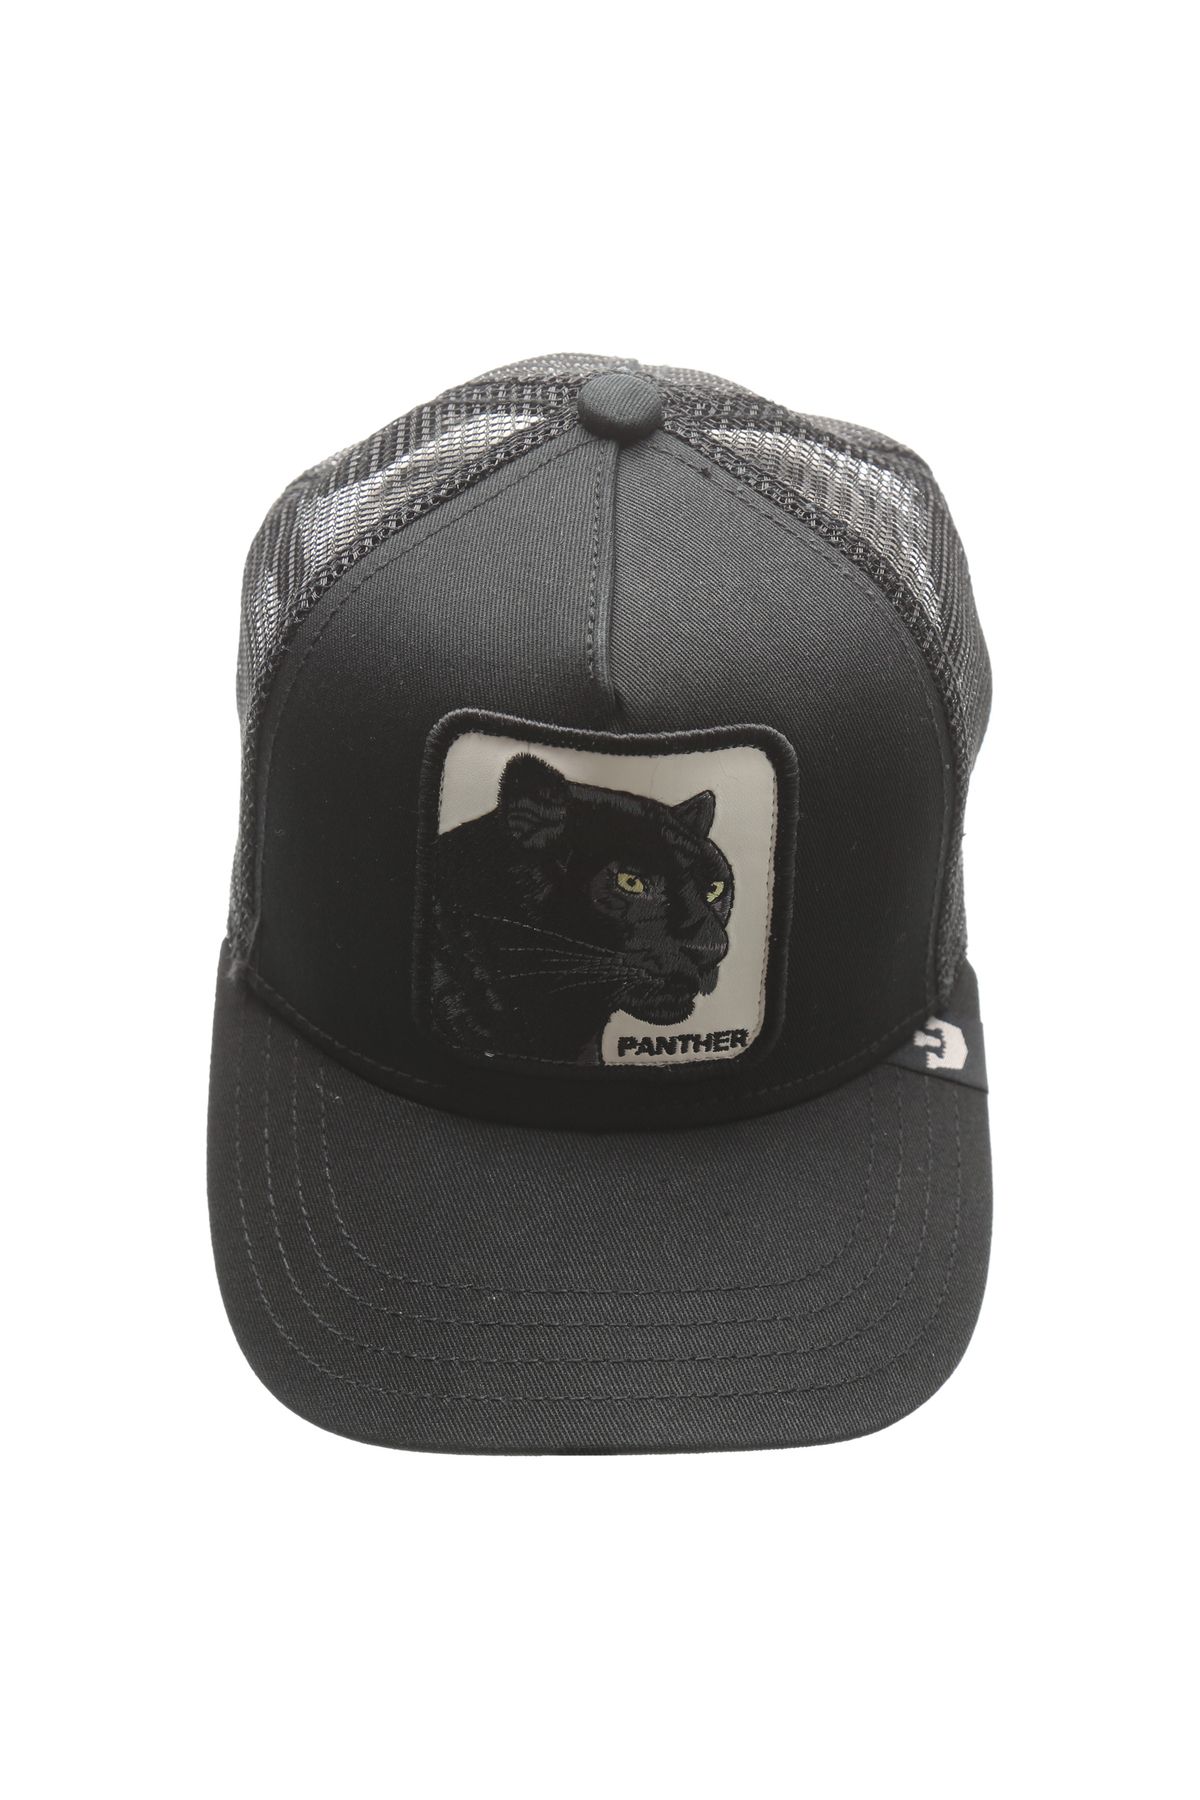 Goorin Bros B201-0025-Black Goorin Bros 201-0025 Panther Cub Hat Black